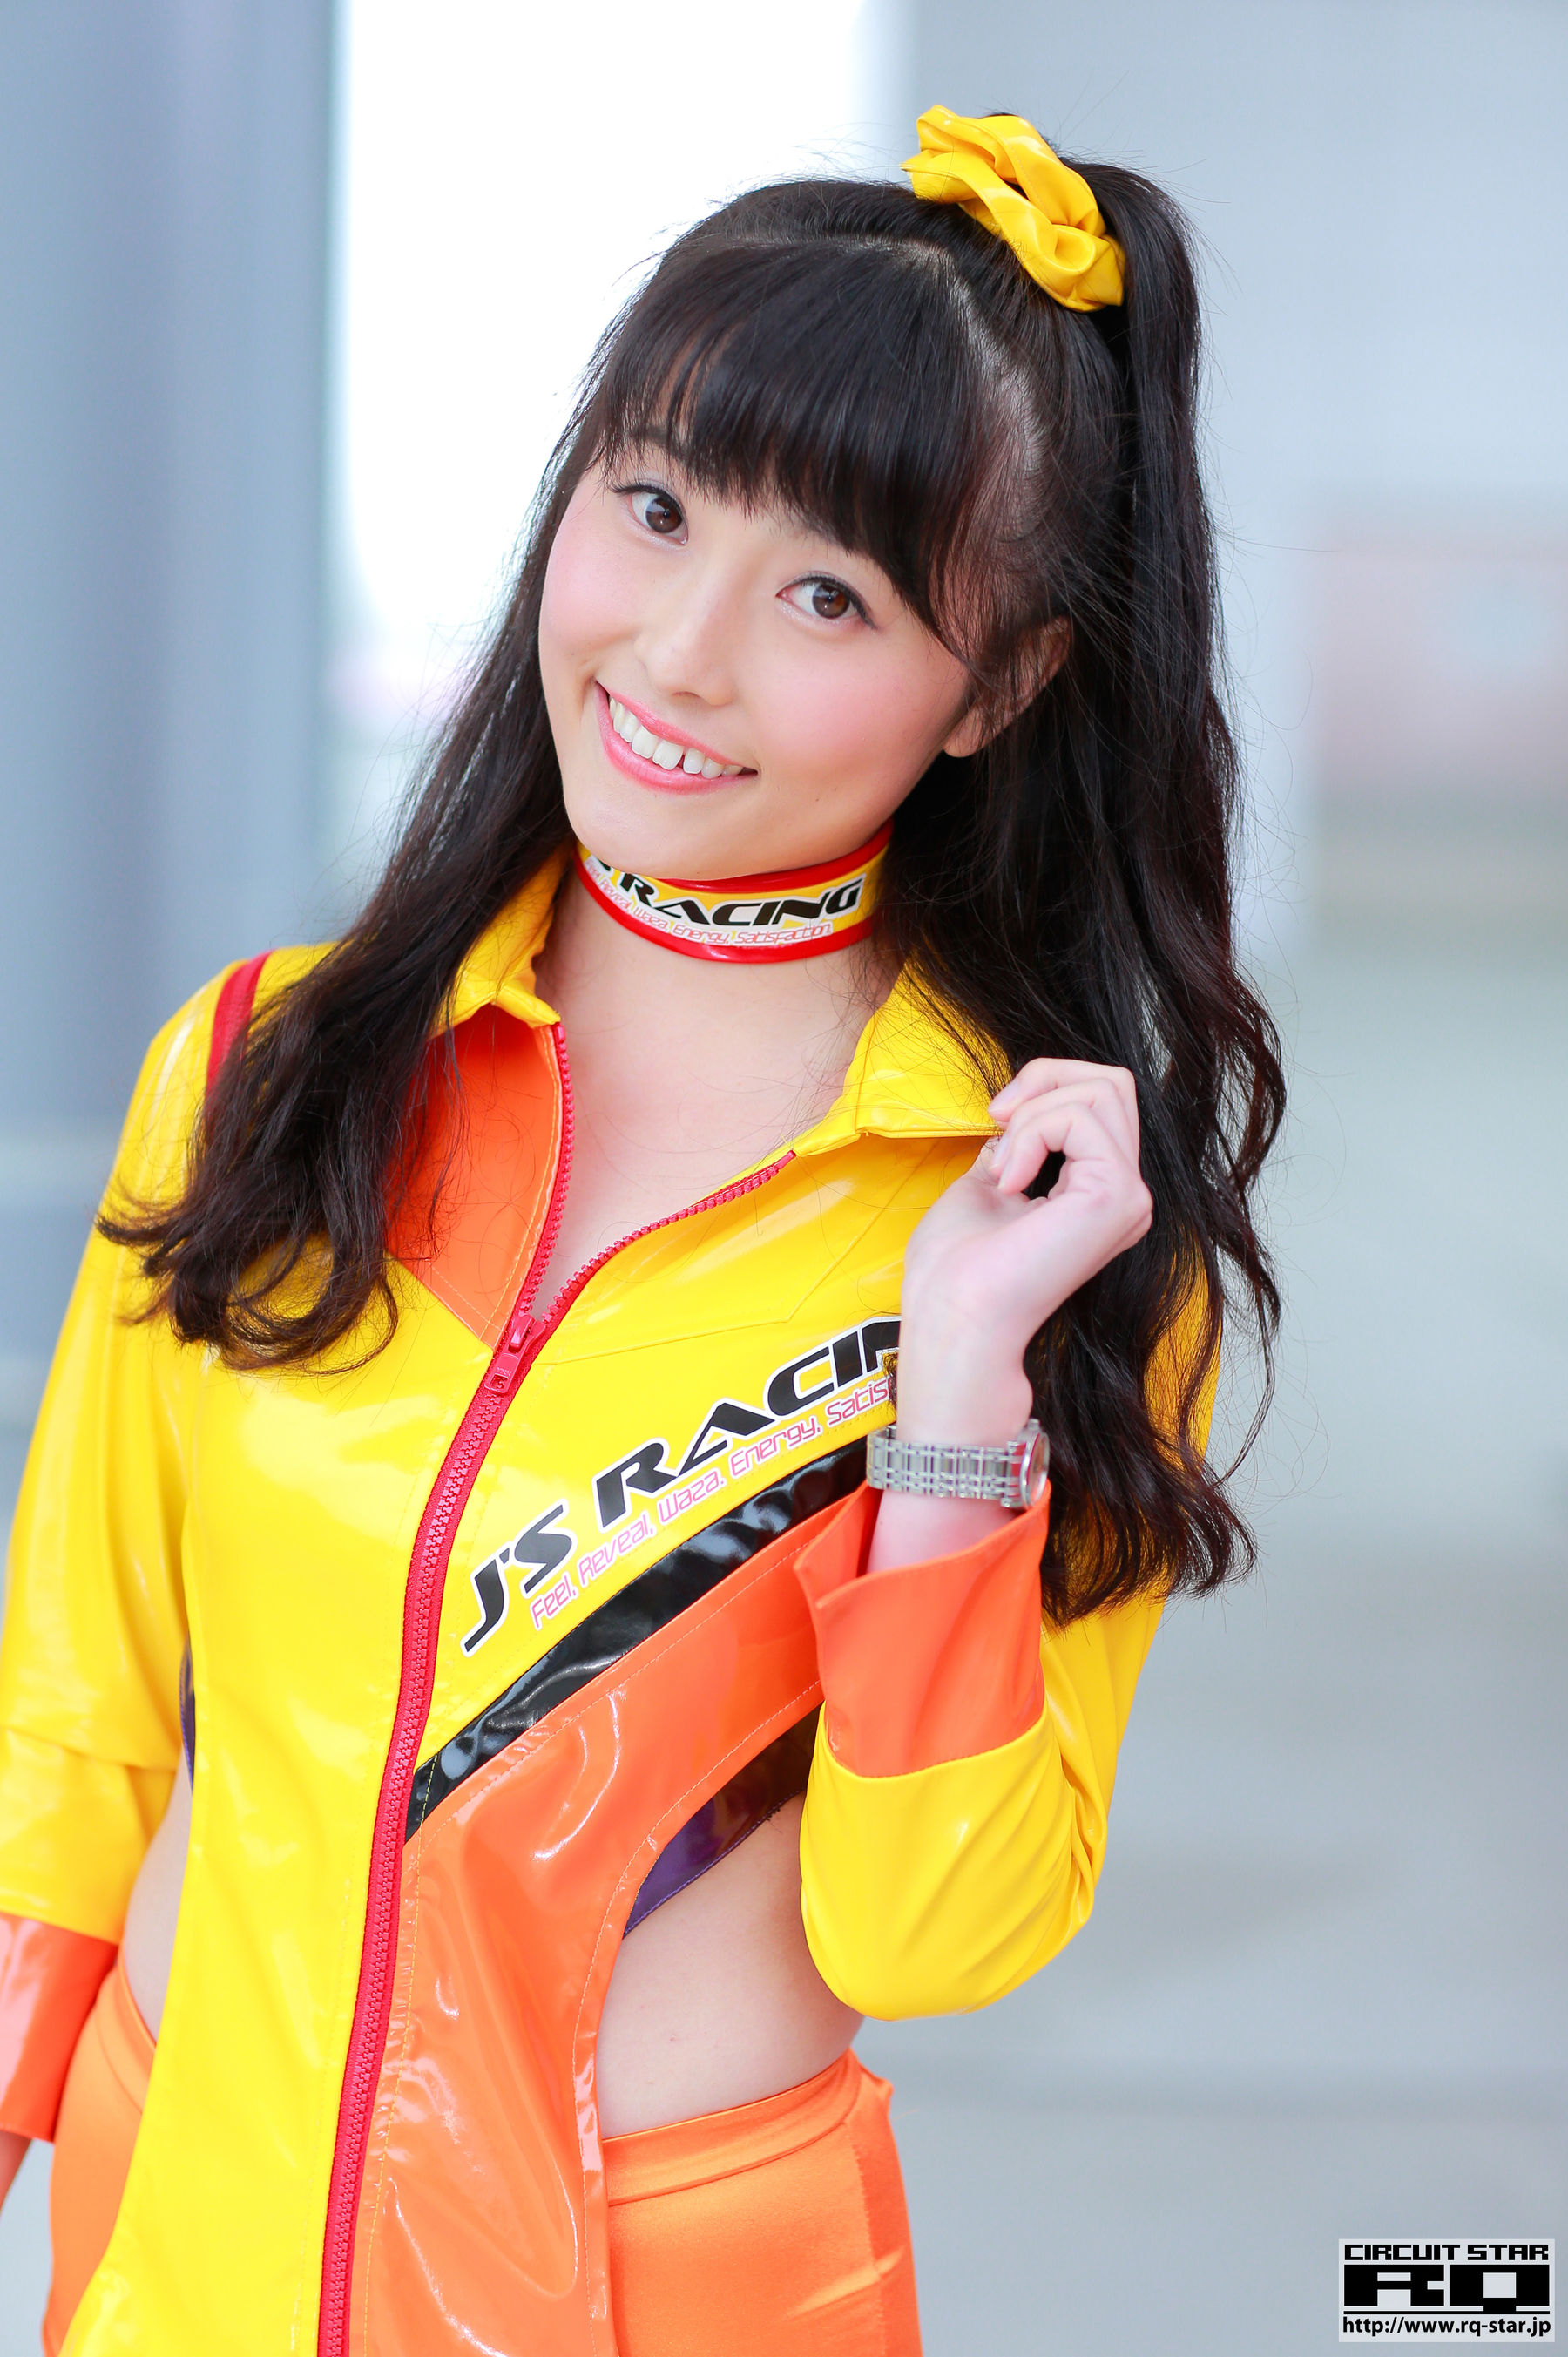 [RQ-STAR] Tomomi Nagao 長尾朋美 Race Queen